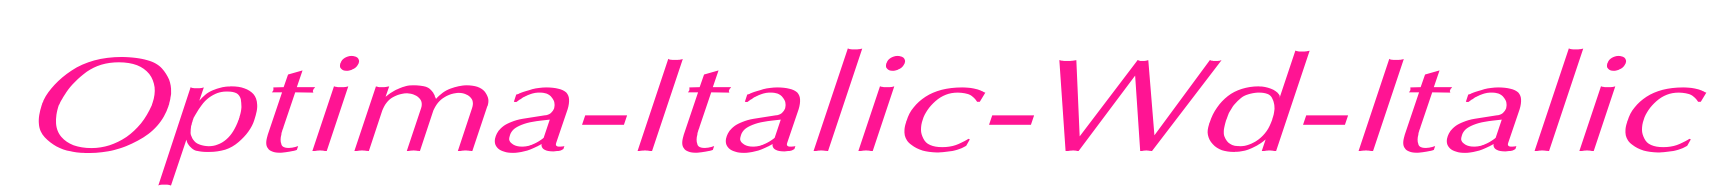 Optima-Italic-Wd-Italic预览图片